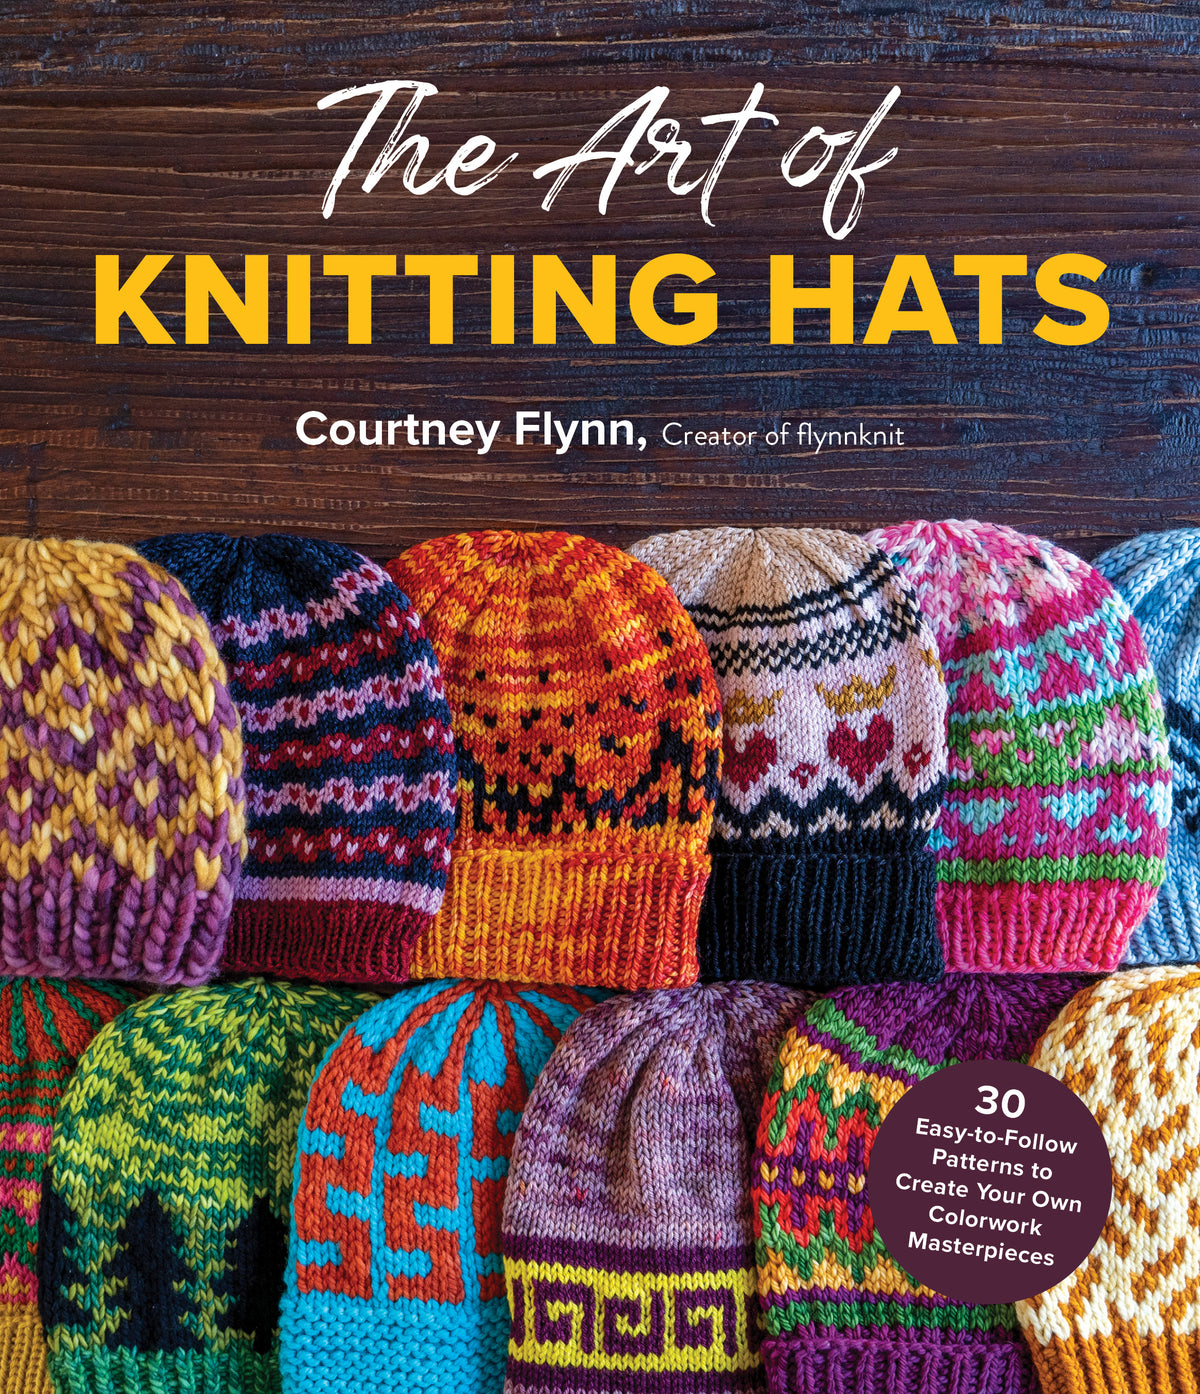 Knit Happy with Self-Striping Yarn by Stephanie Lotven